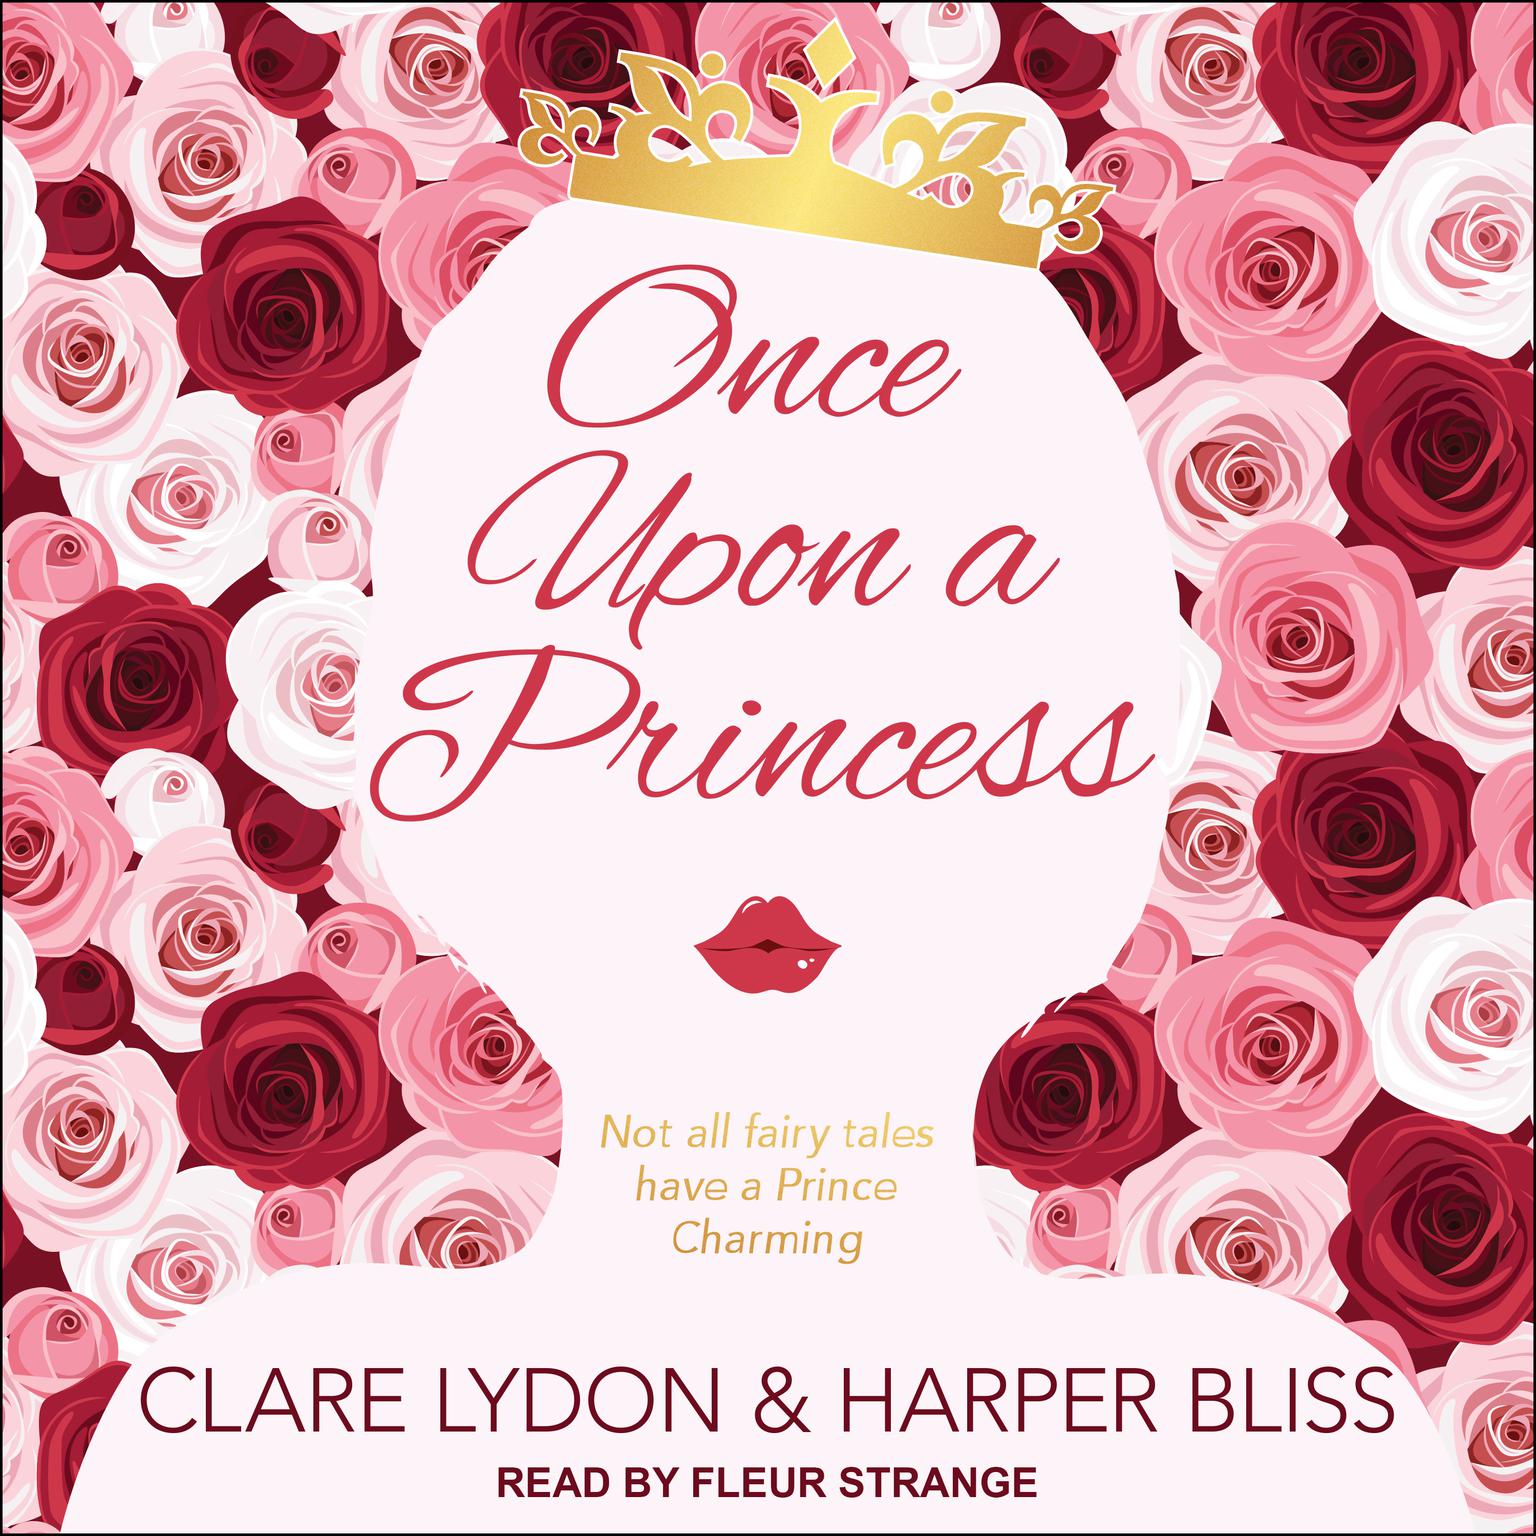 Harper Bliss, Clare Lydon, Fleur Strange: Once Upon a Princess (AudiobookFormat, 2018, Tantor)